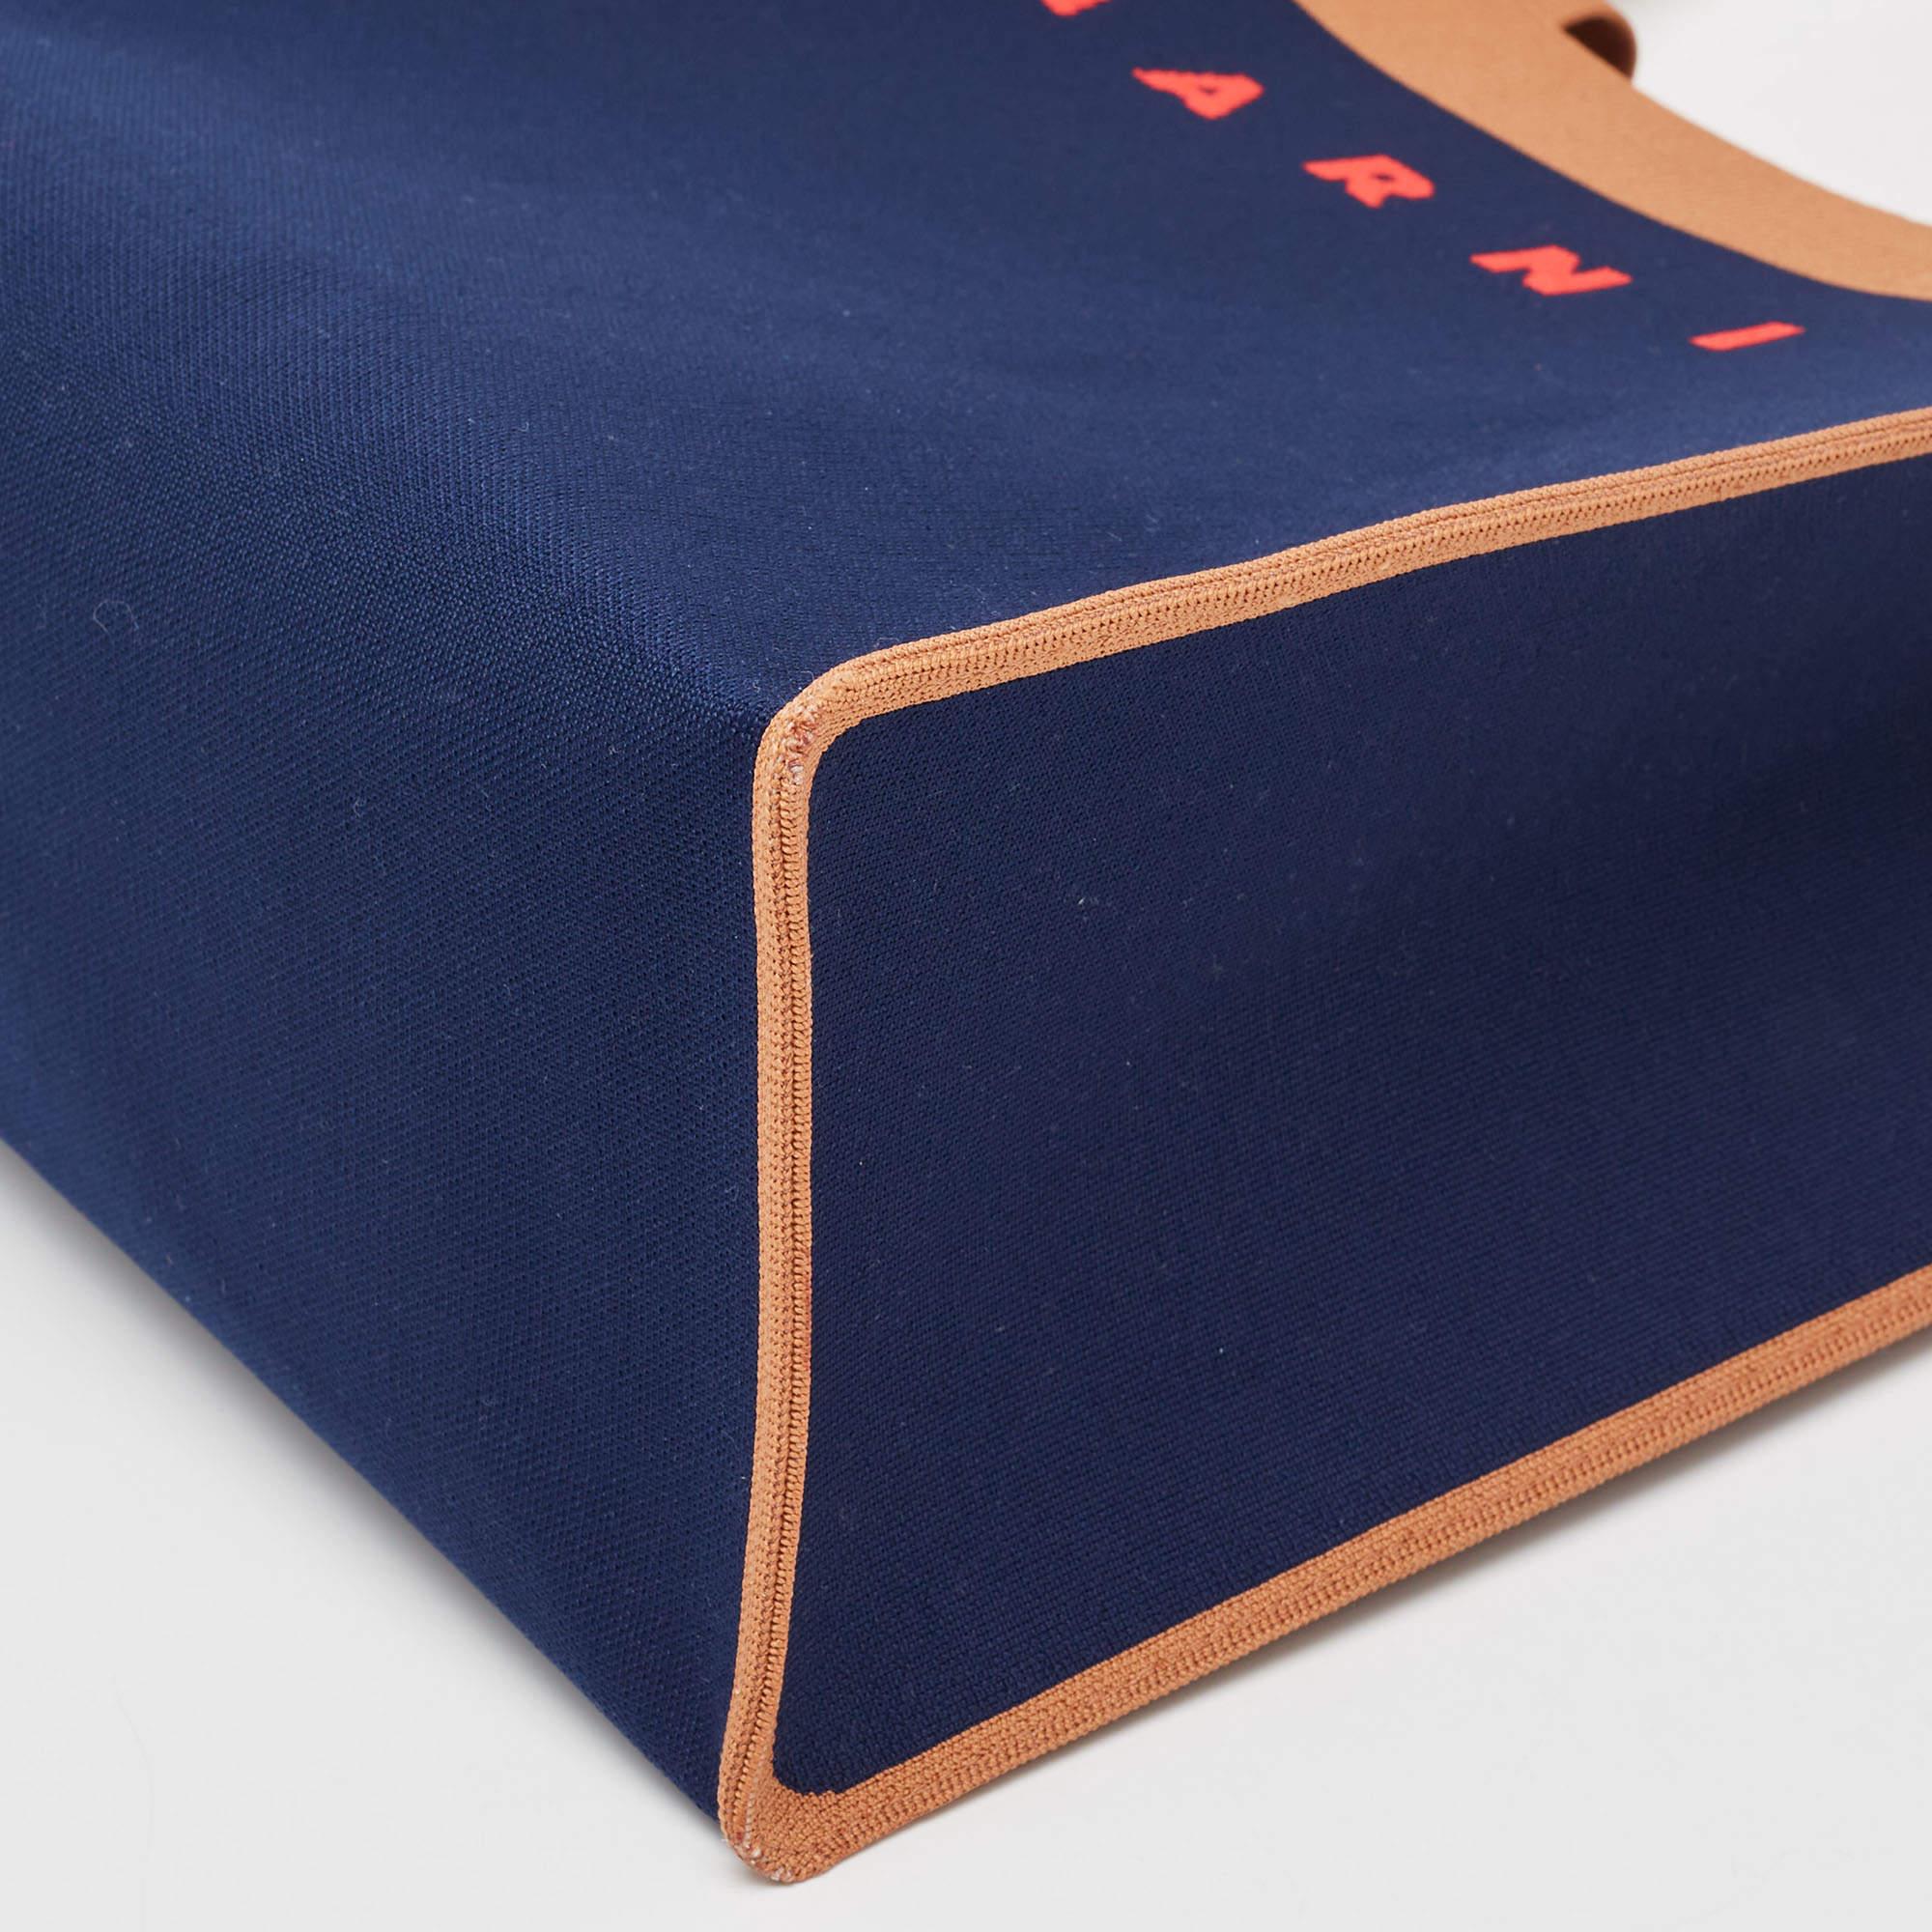 Marni Navy Blue/Brown Knit Fabric Medium Shopper Tote 1